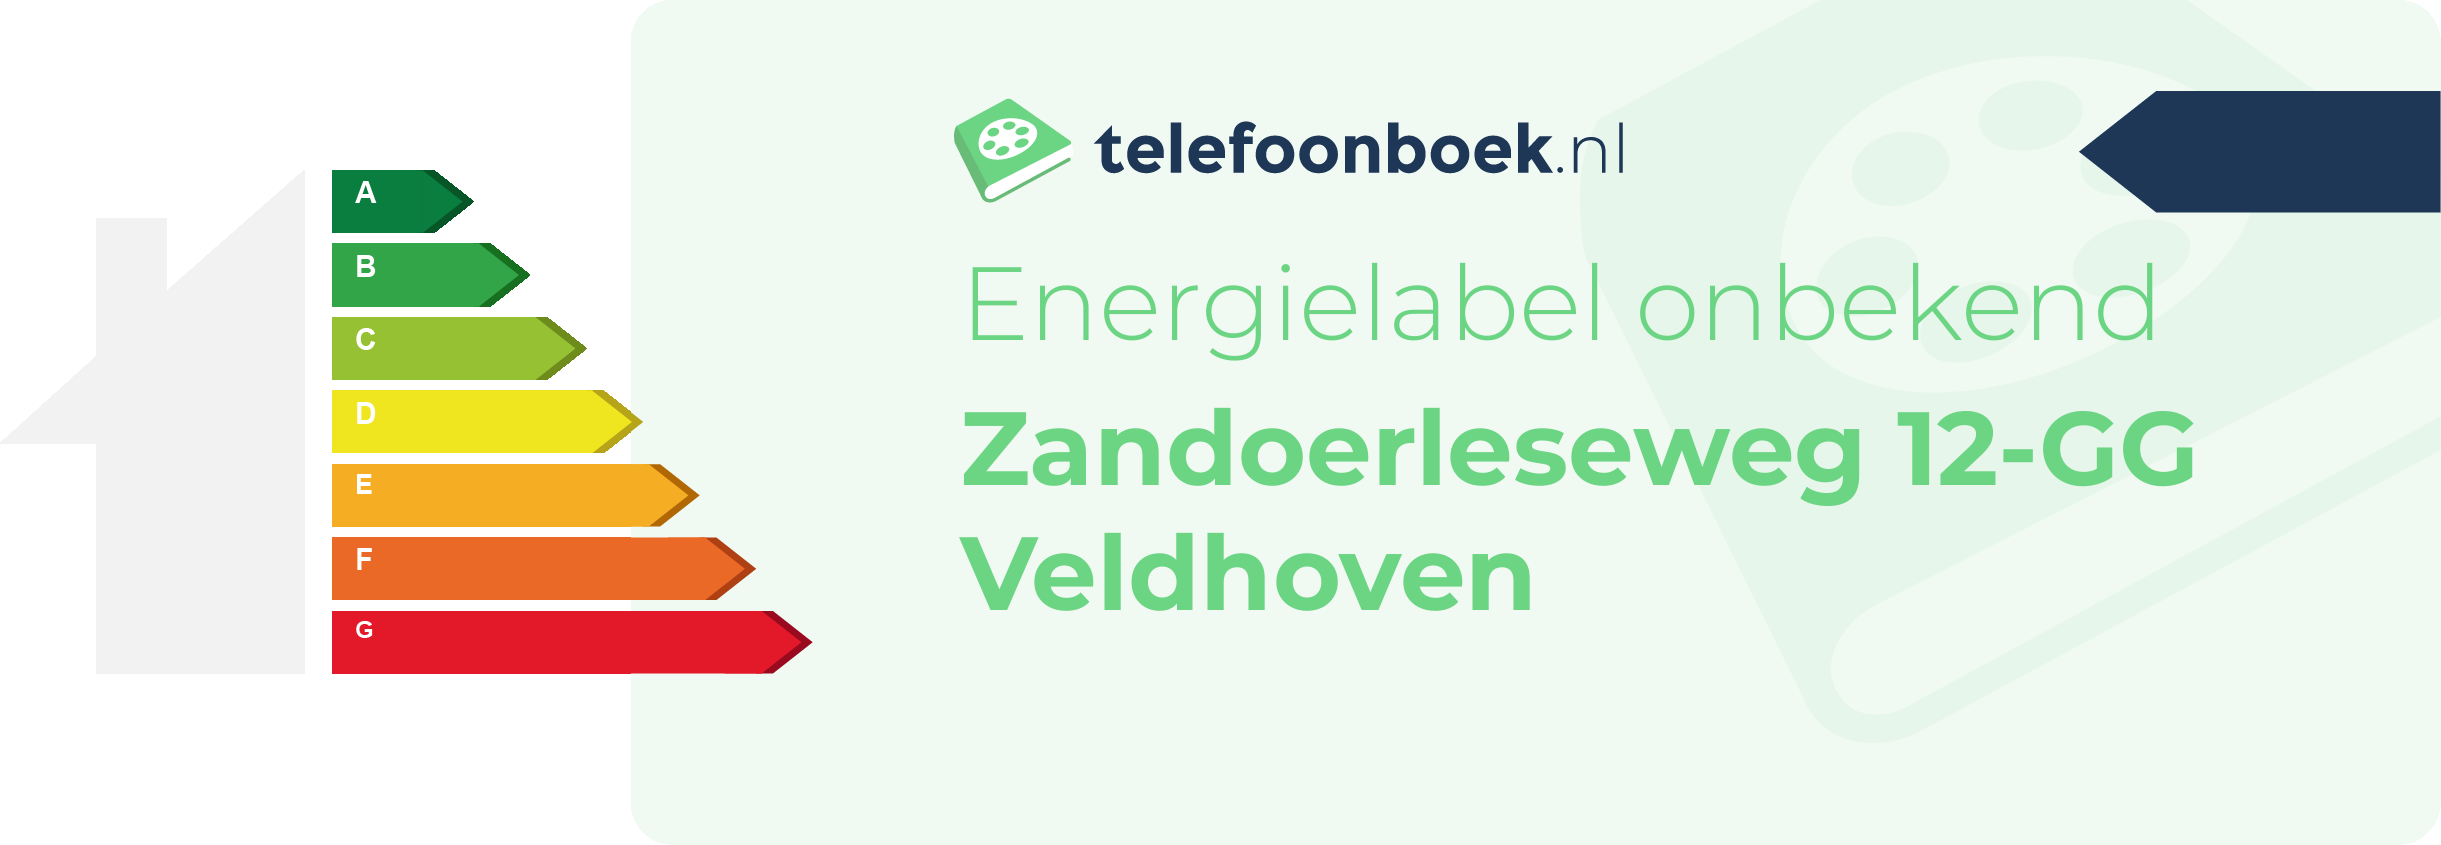 Energielabel Zandoerleseweg 12-GG Veldhoven